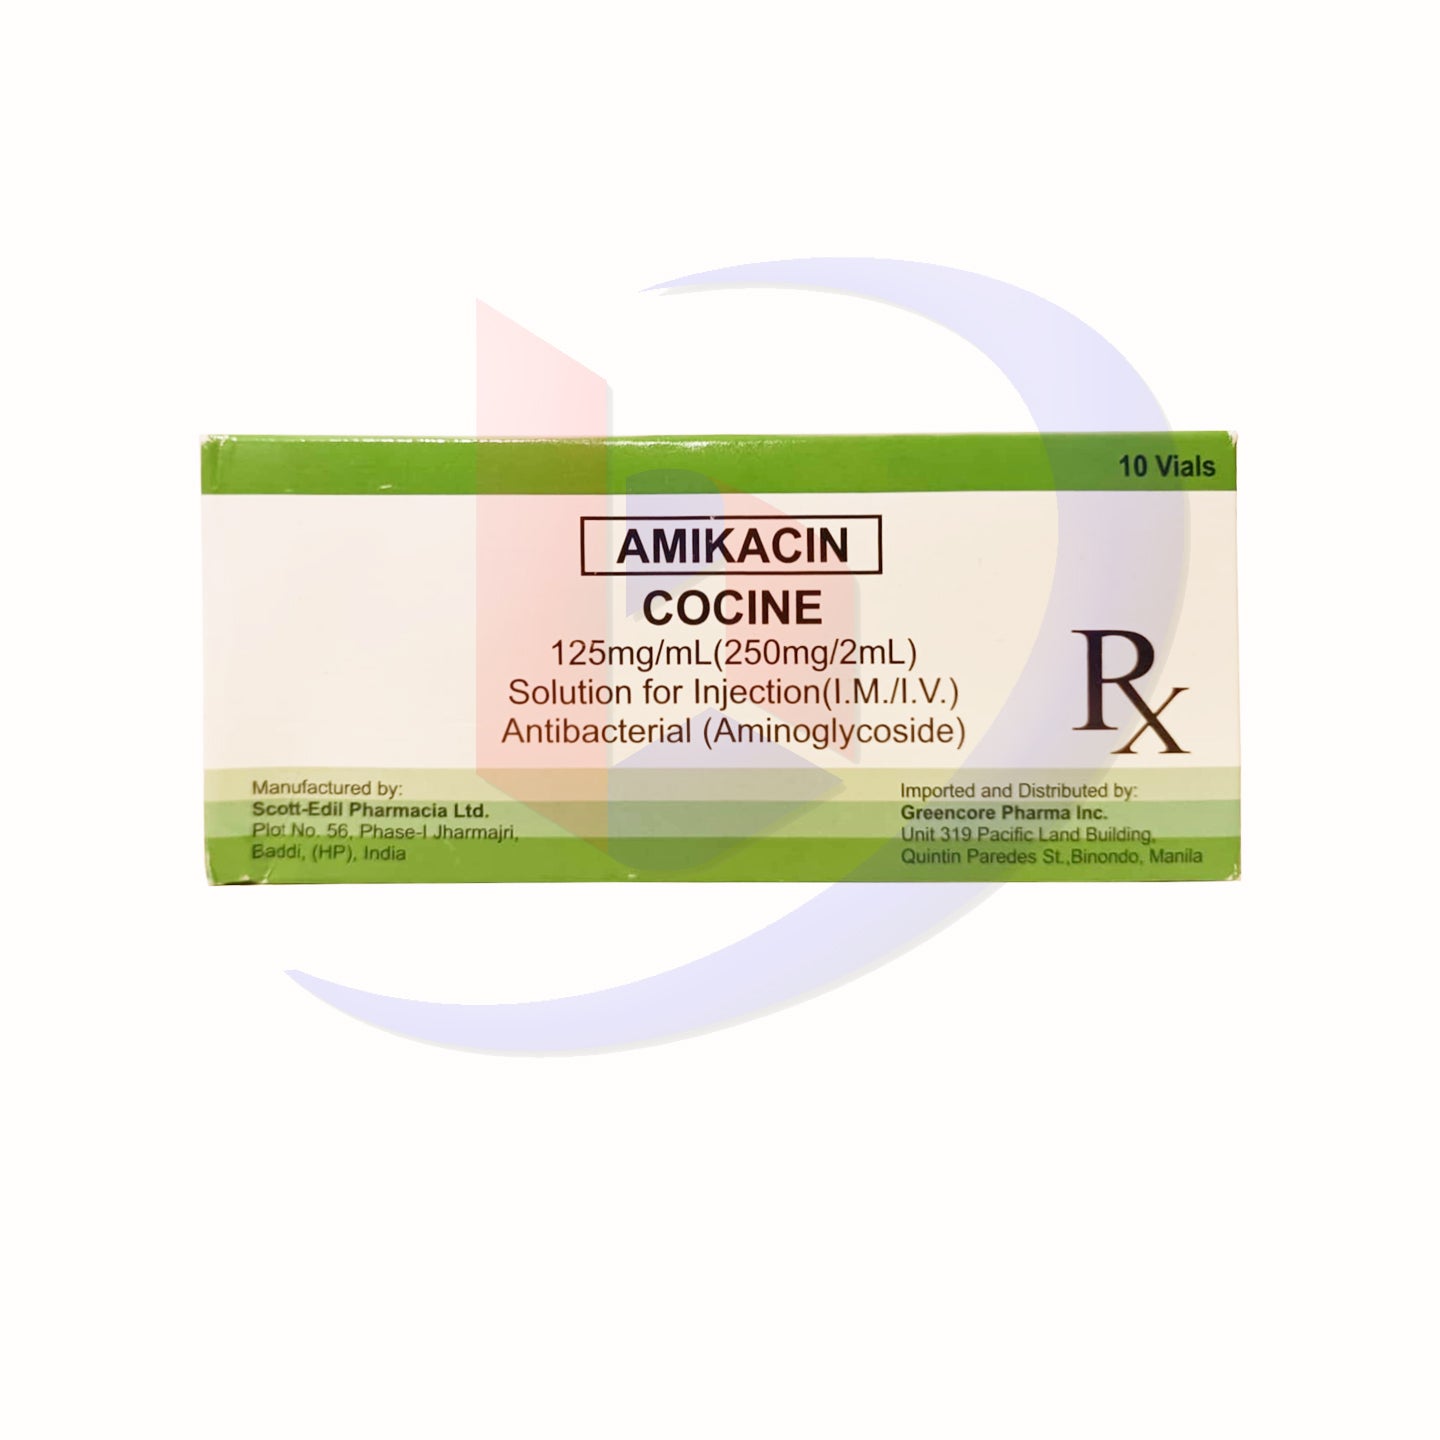 Amikacin (Cocine) 125mg/ml (250mg/2ml) Solution for Injection (I.M / I.V) Vial 1's